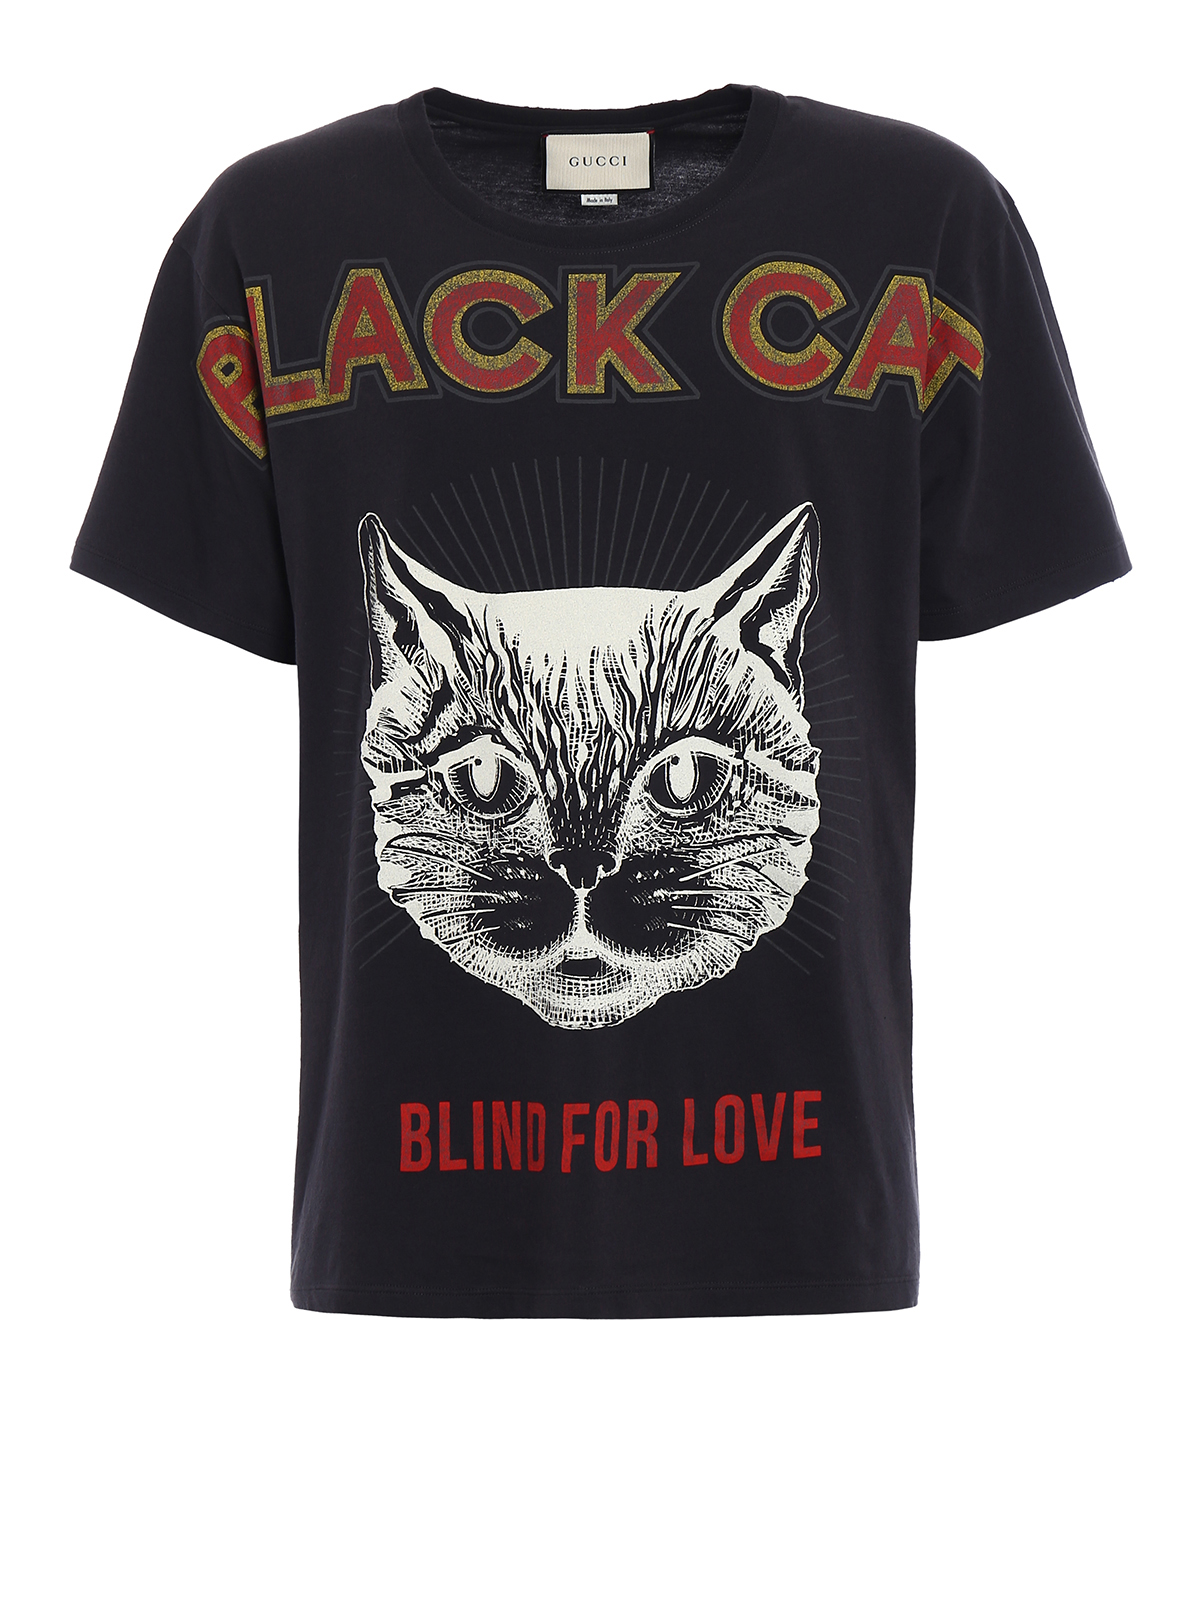 gucci black cat t shirt